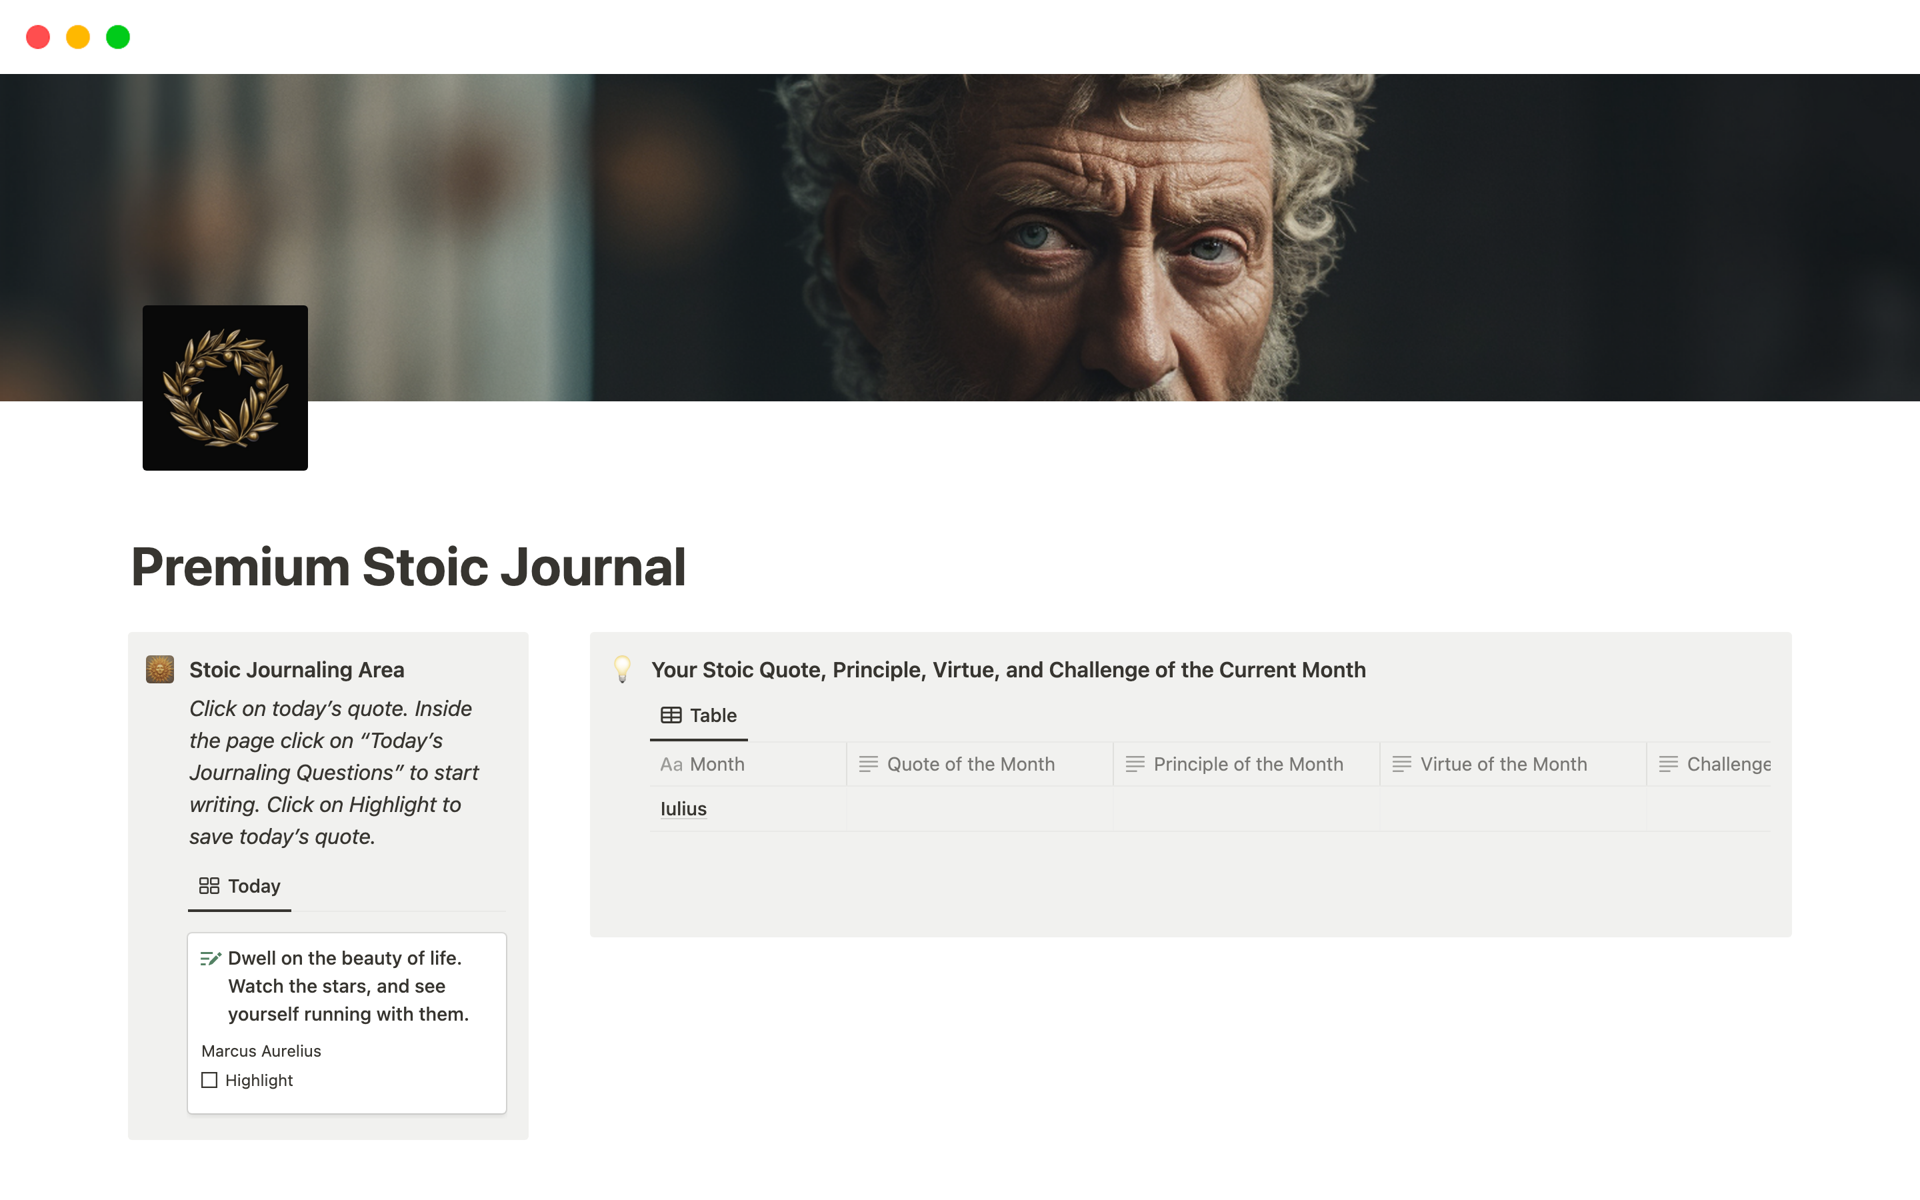 Vista previa de una plantilla para Premium Stoic Journal